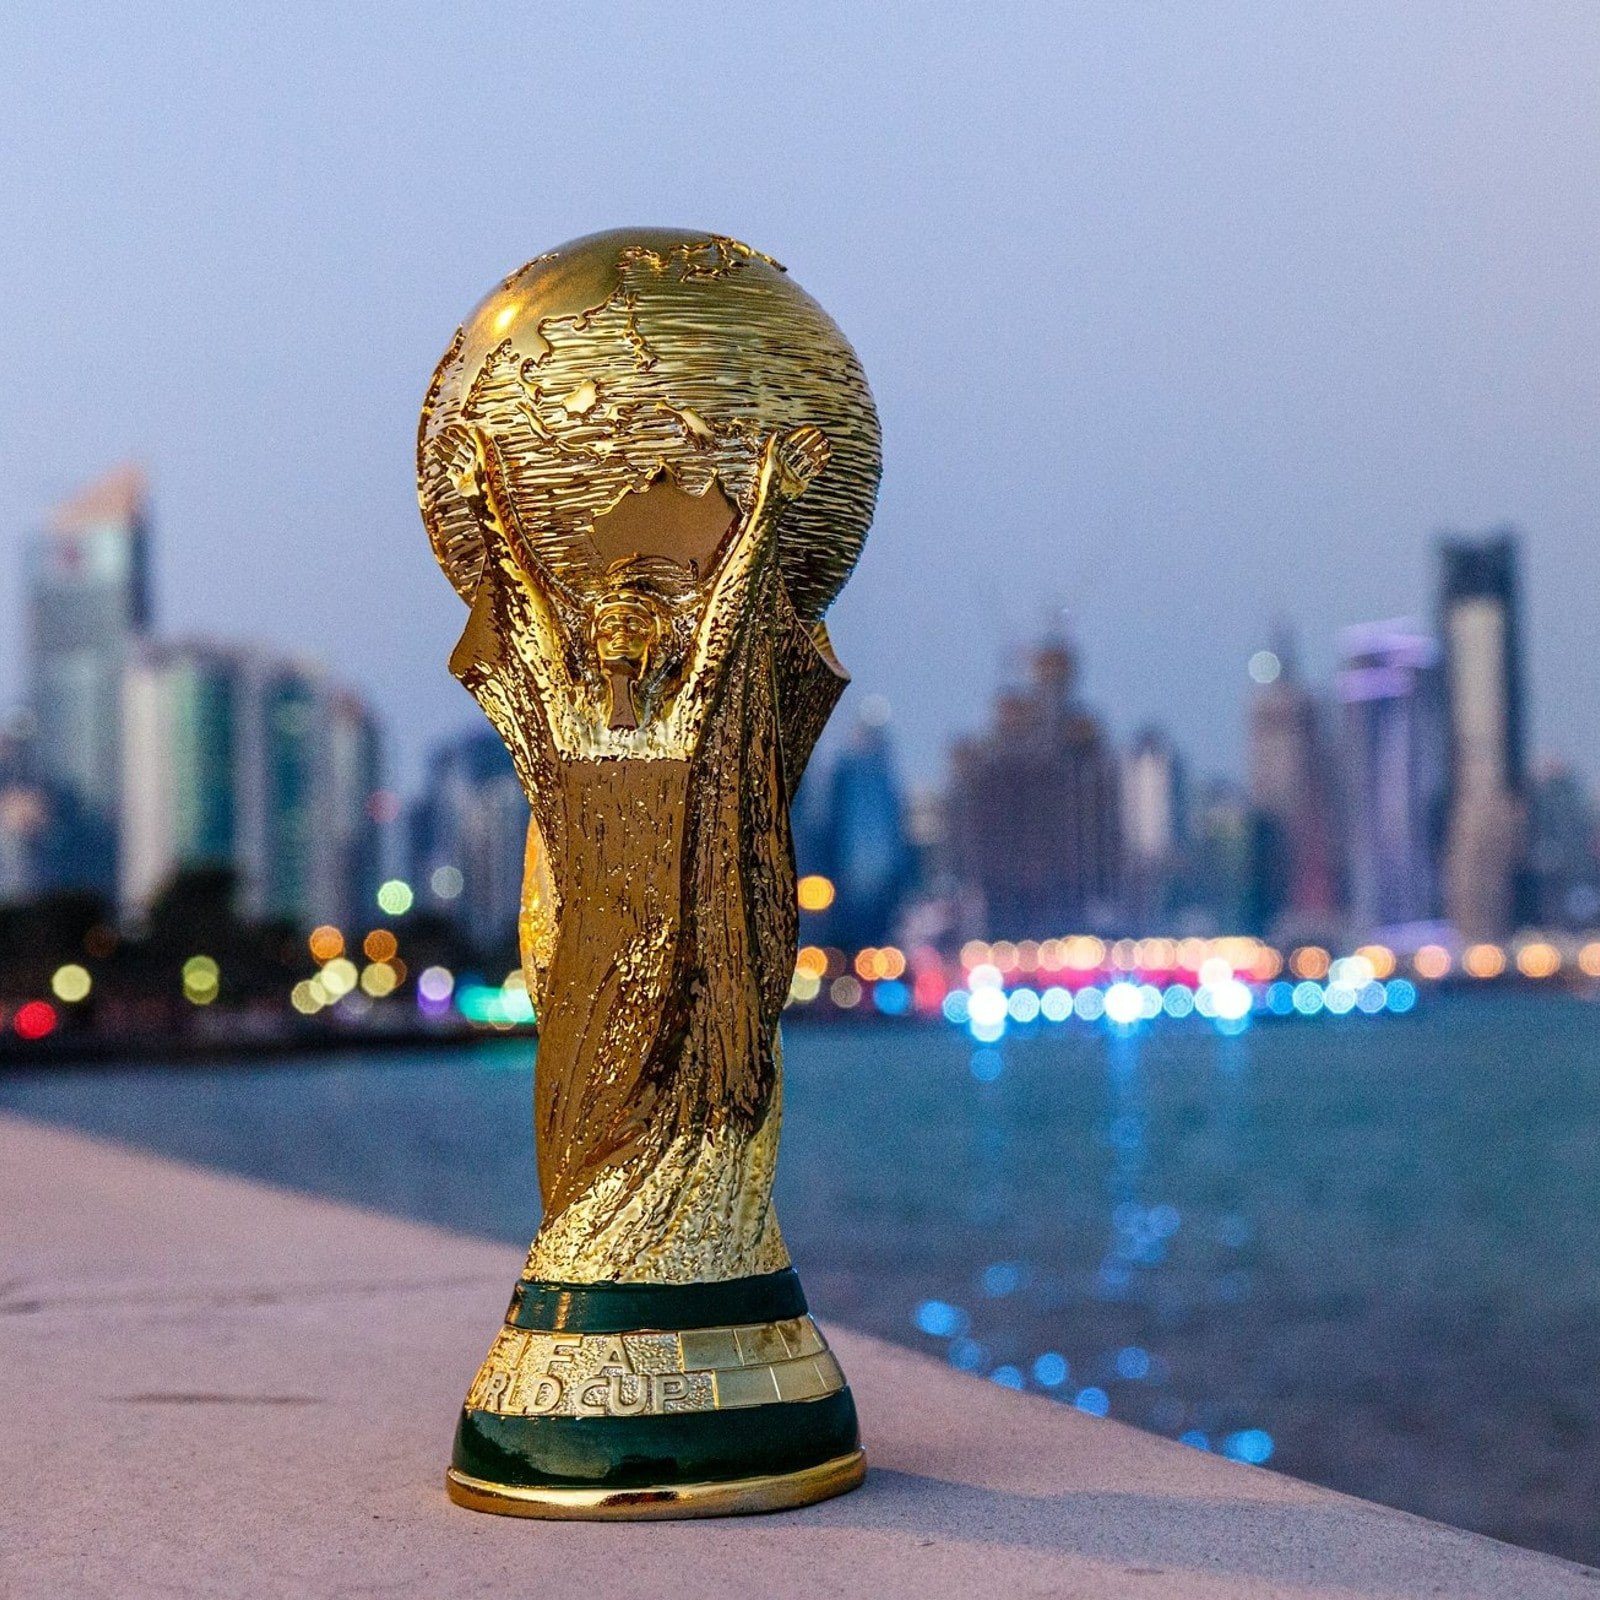 Qatar World cup 2022